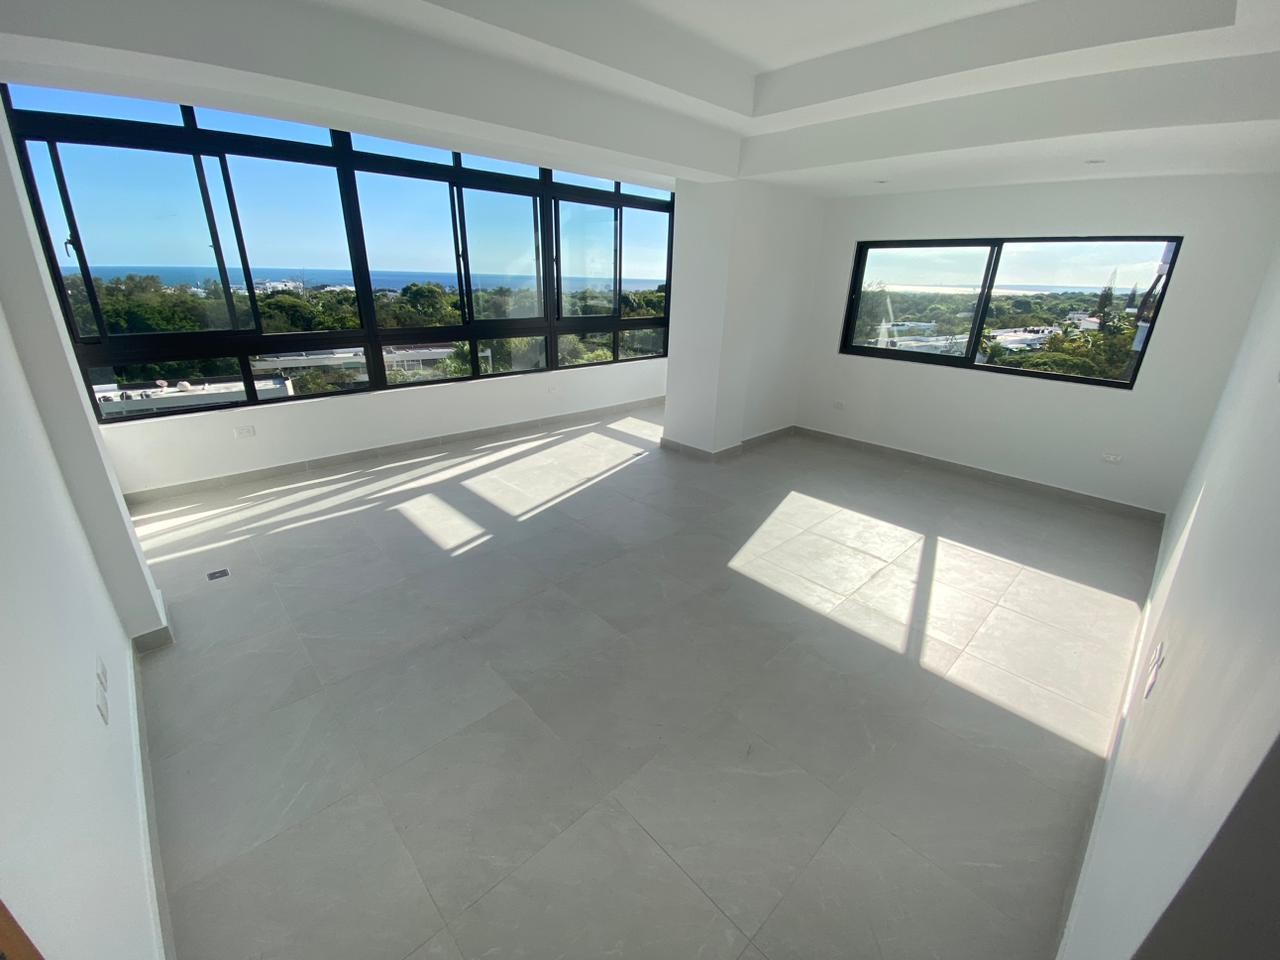 penthouses - Pent-house Nuevo en VentaMIRADOR SUR Mantenimiento: RD$12,000. 0